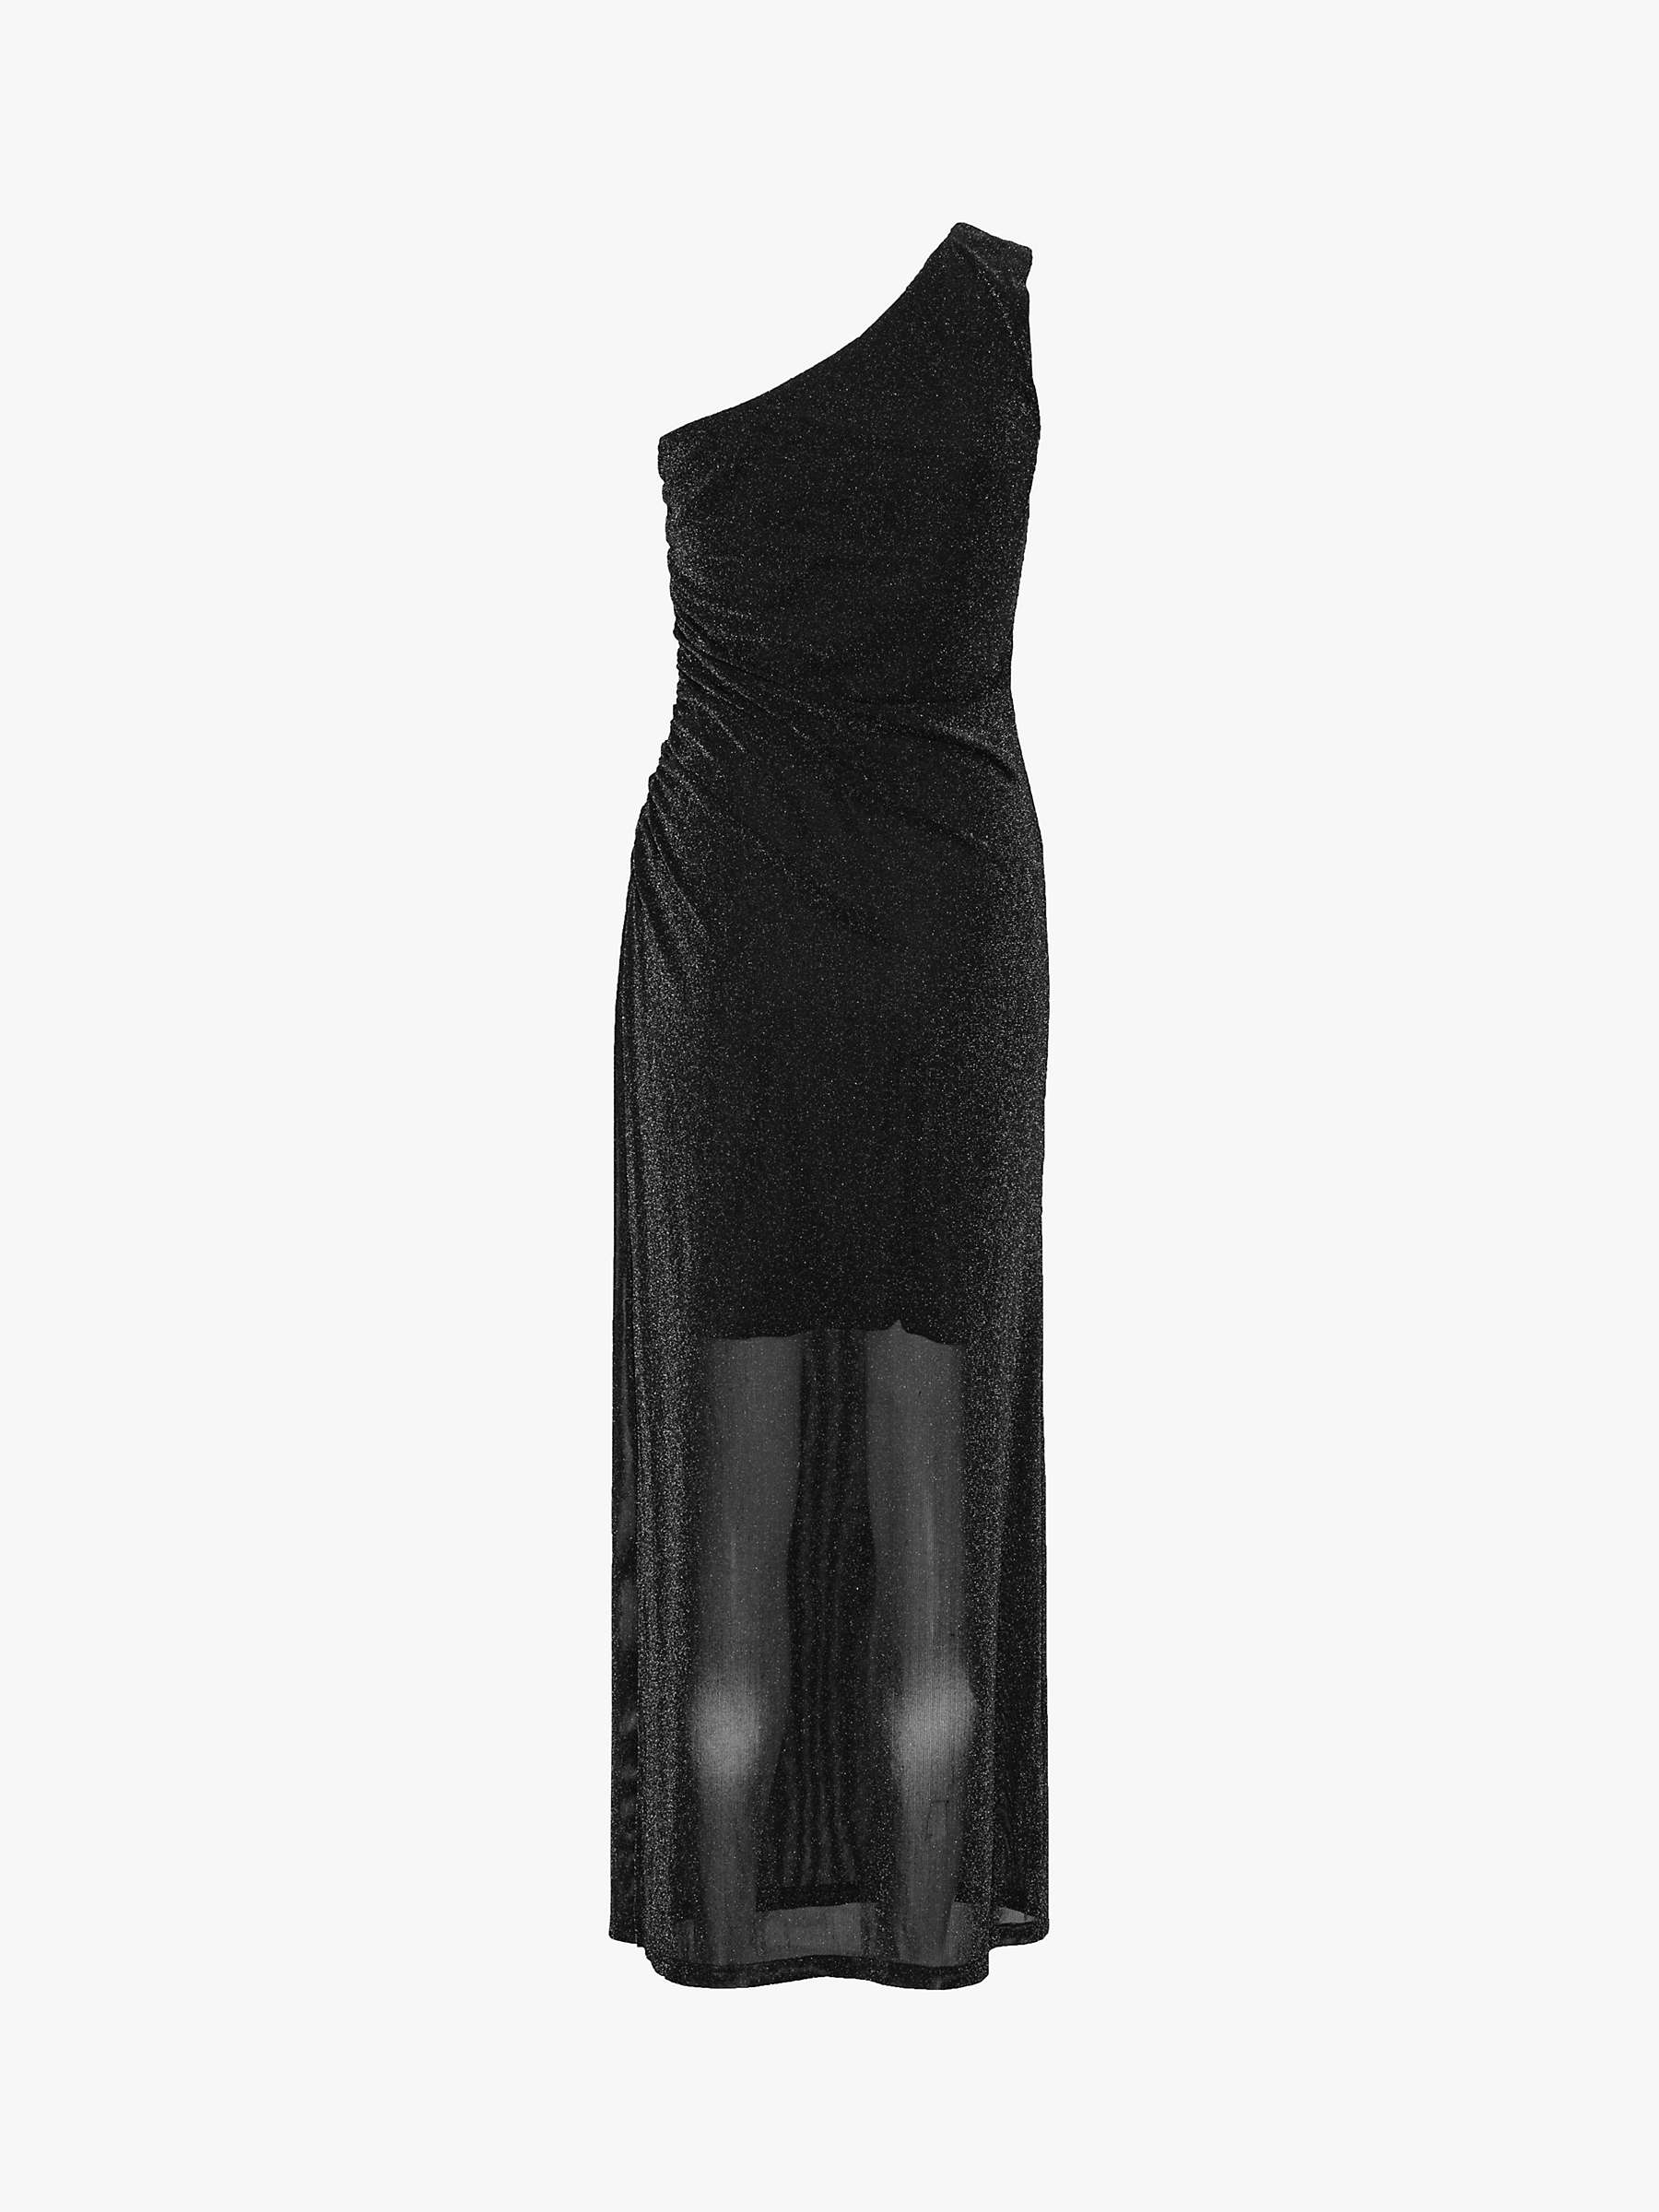 Buy A-VIEW Passion Side Slit Maxi Dress, Black Online at johnlewis.com